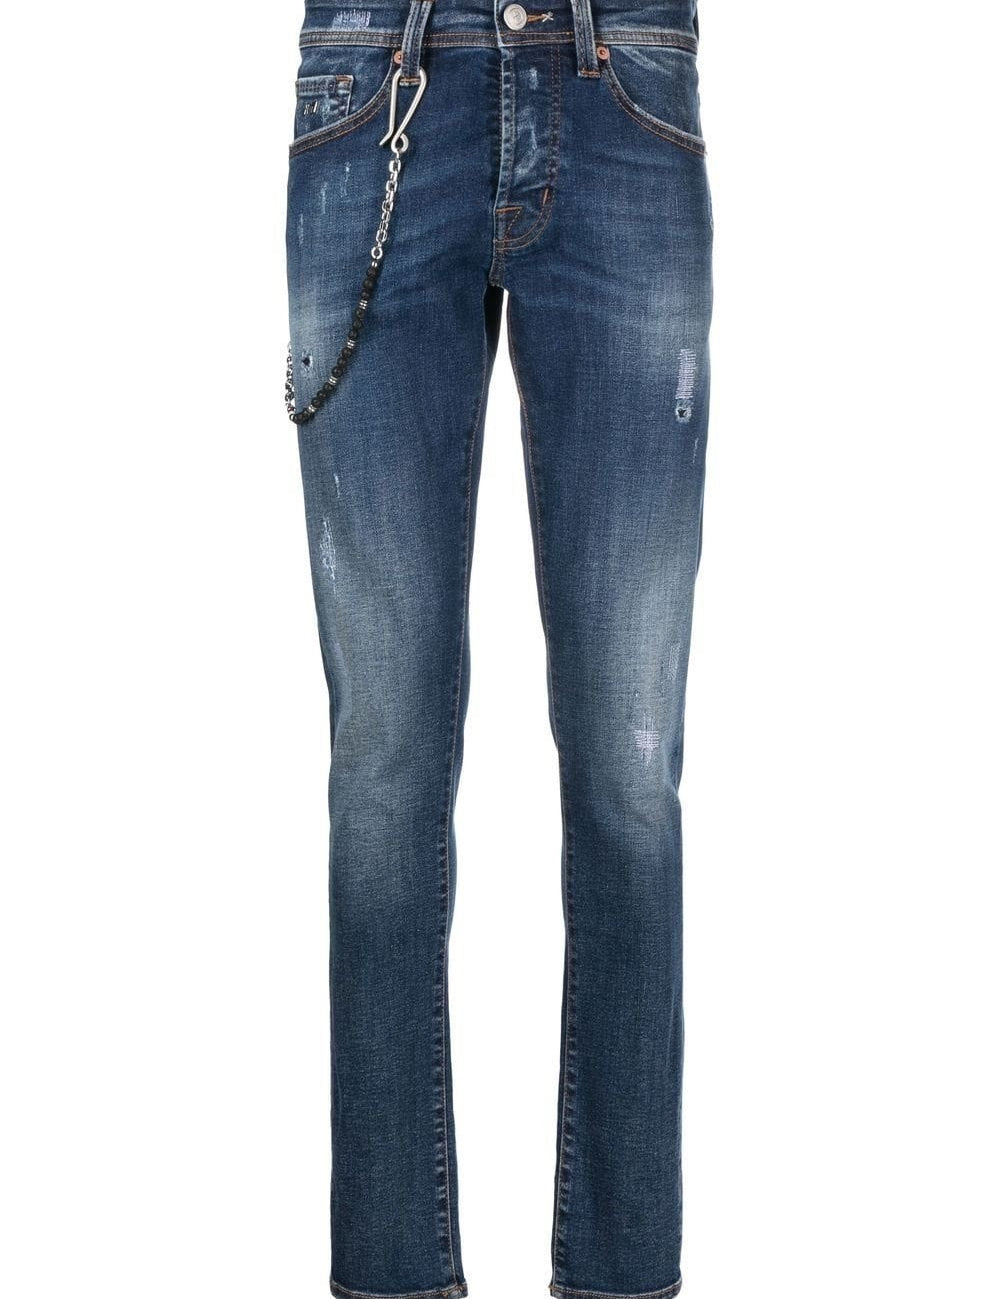 denim-confort-jeans.jpg